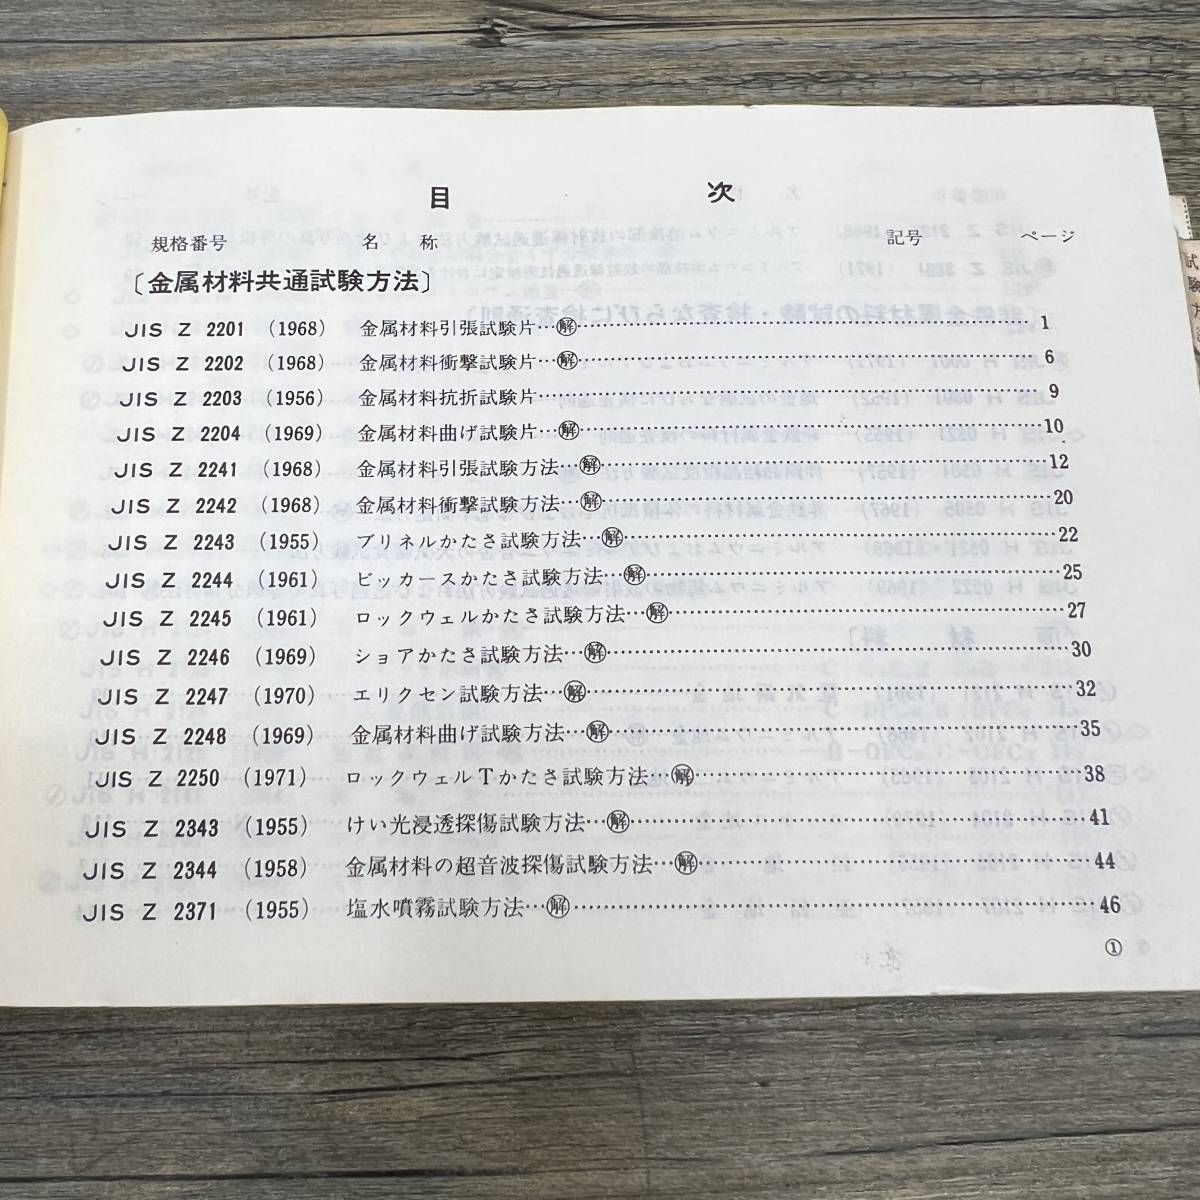 Z-8626#1972 year JIS hand book non iron # Japanese standard association #